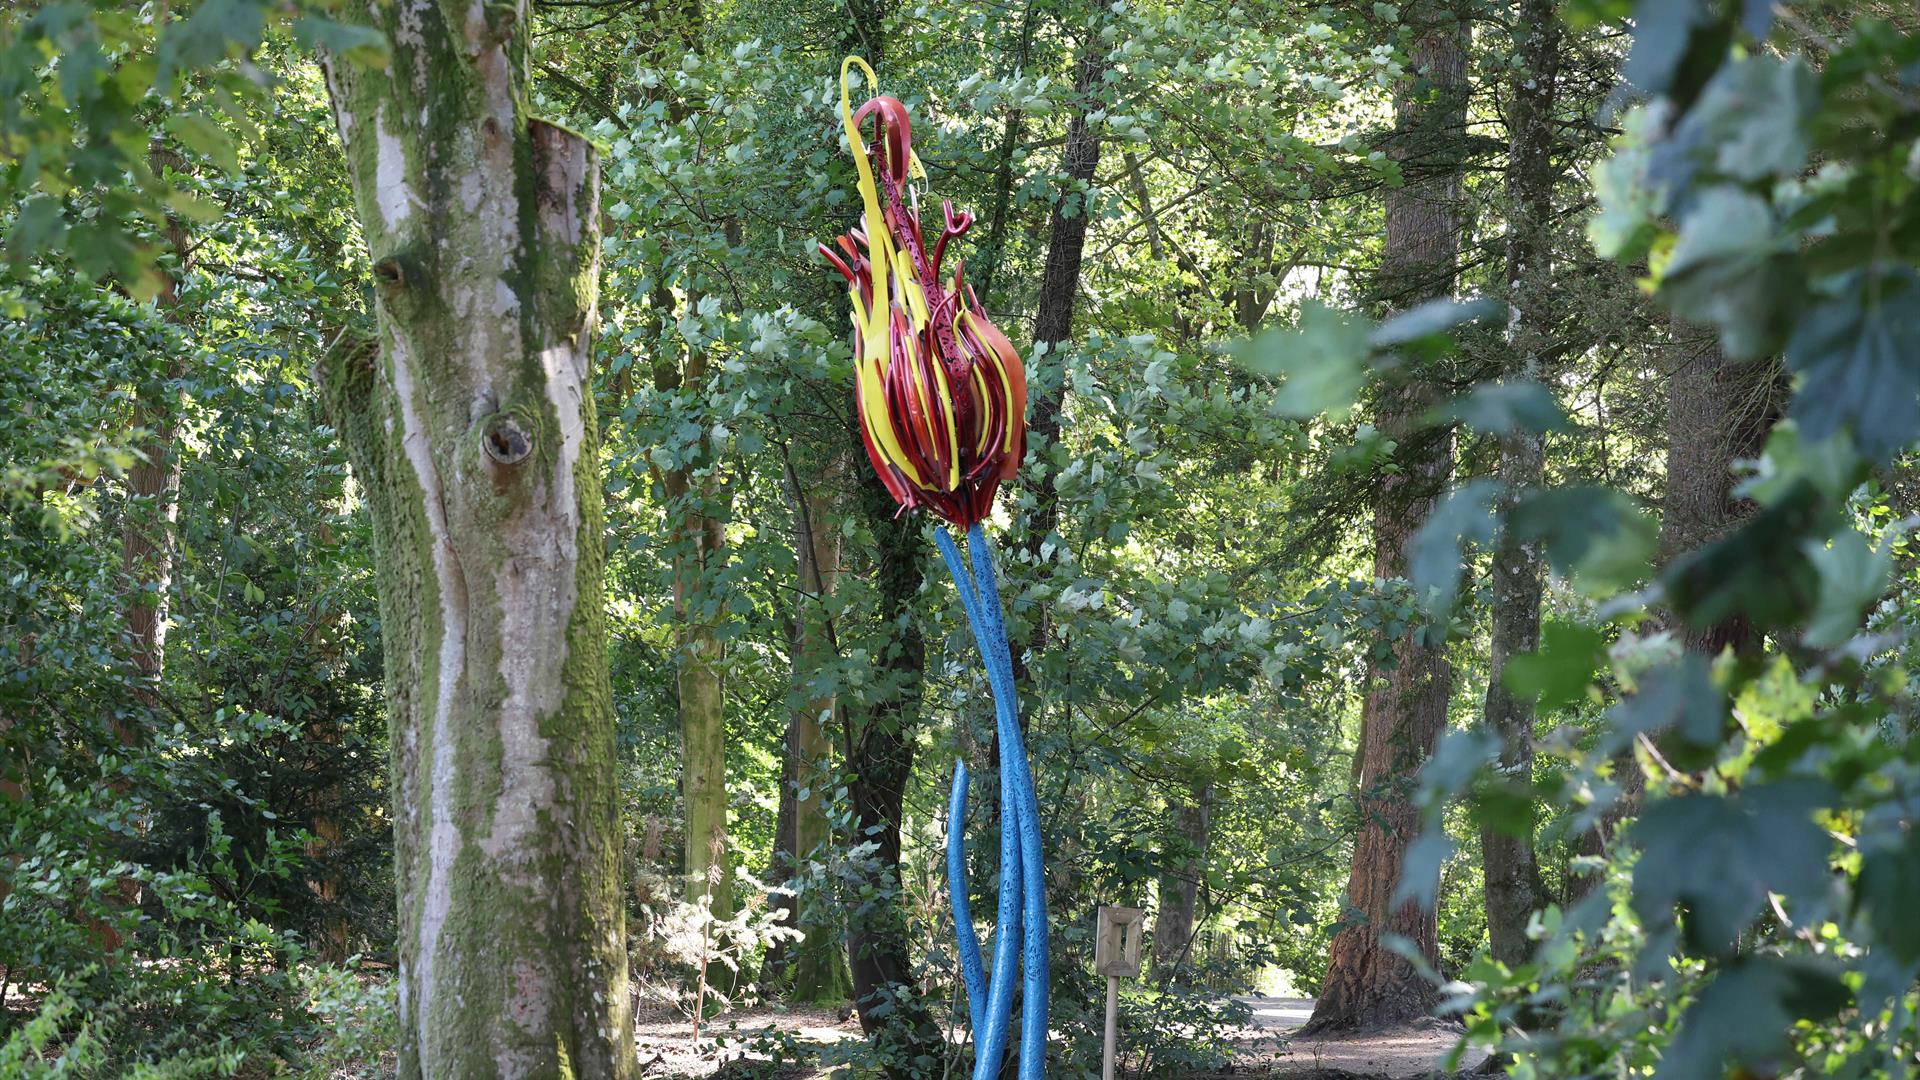 The Beacon of Light sculpture in Hillsborough Forest Park